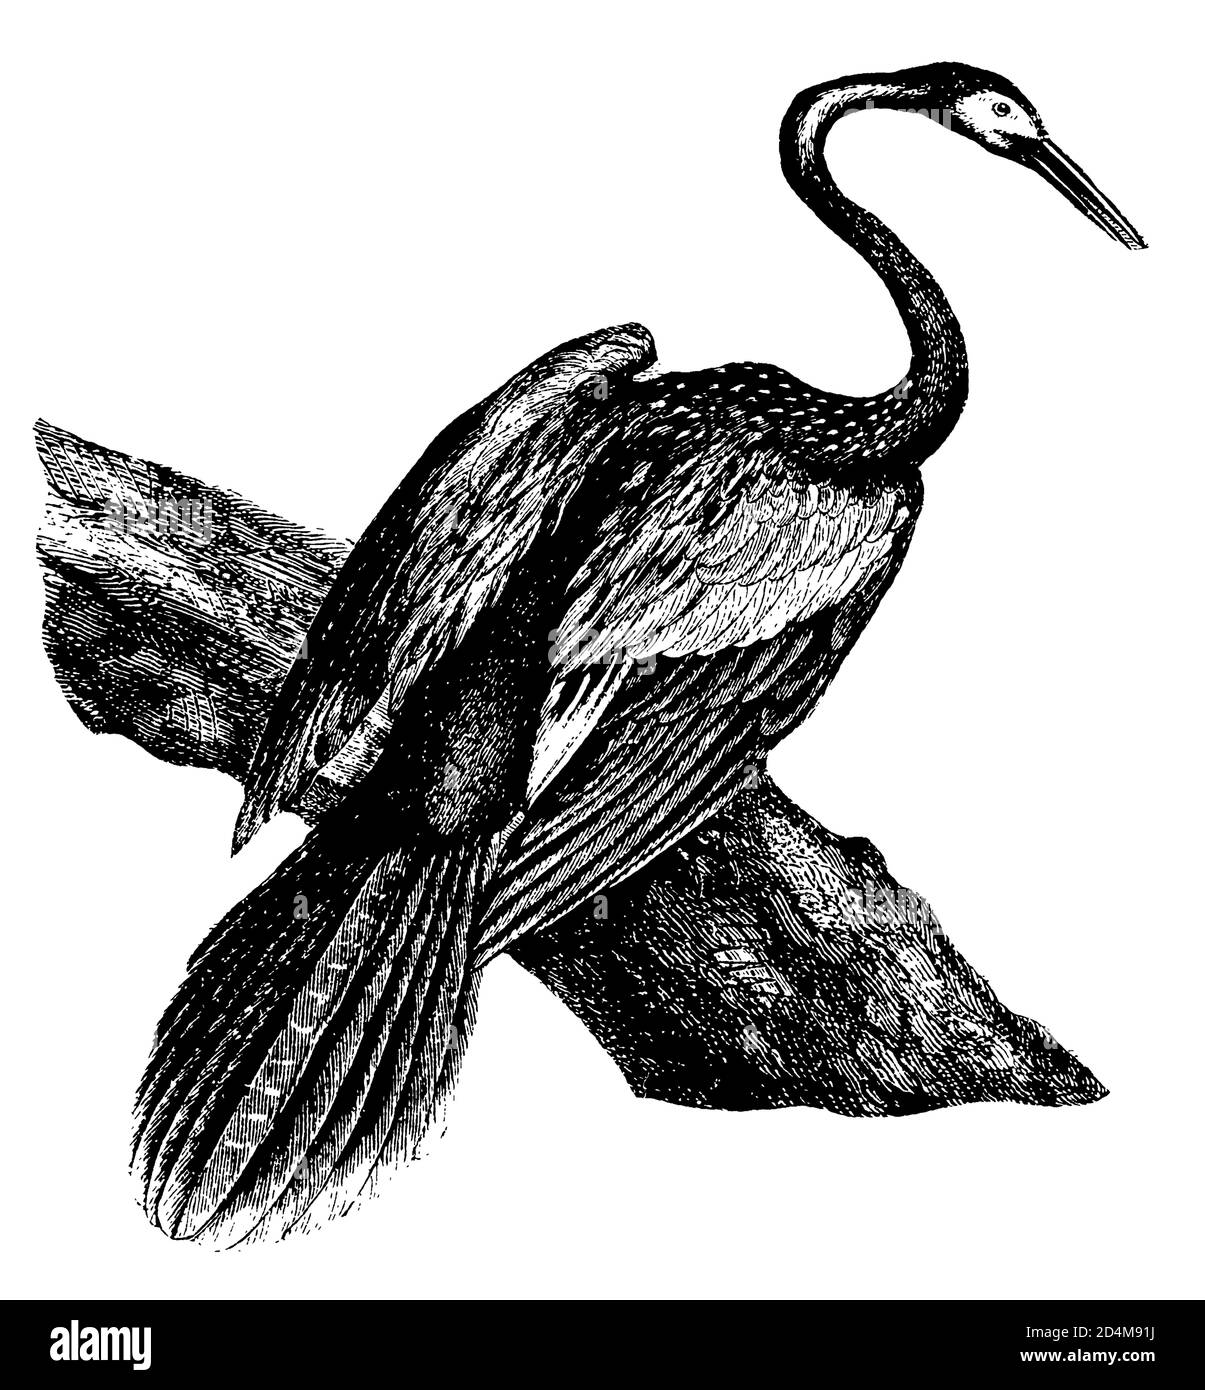 Antique 19th-century illustration of an anhinga bird (isolated on white). Published in Systematischer Bilder-Atlas zum Conversations-Lexikon, Ikonogra Stock Photo